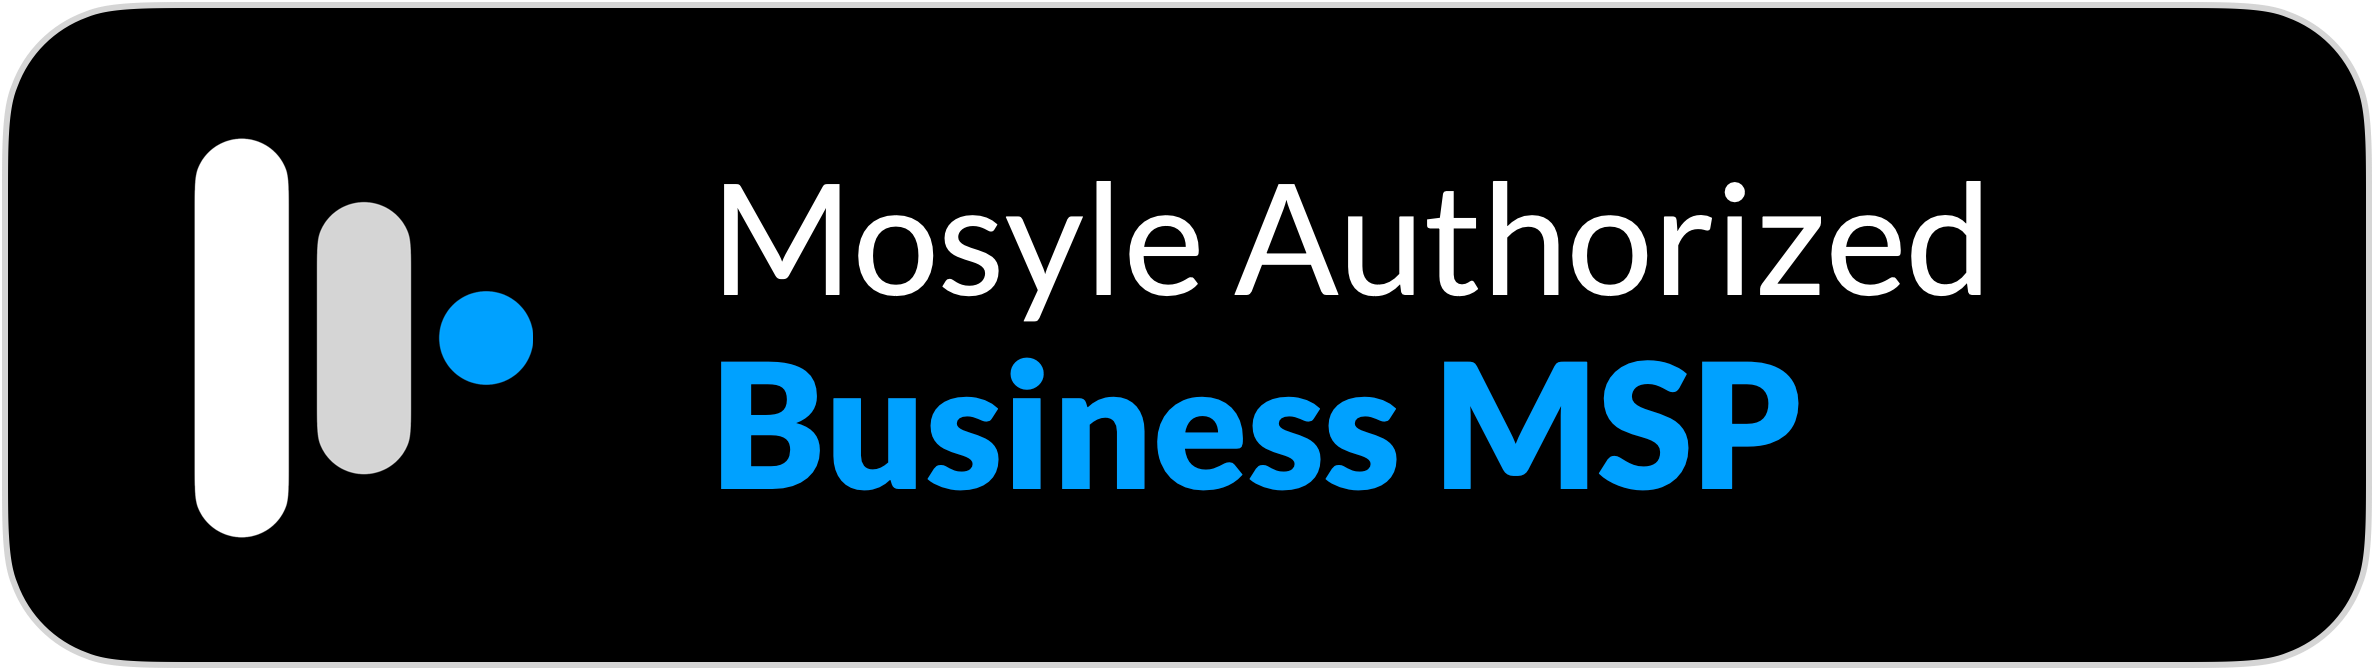 Mosyle Authorized Business MSP